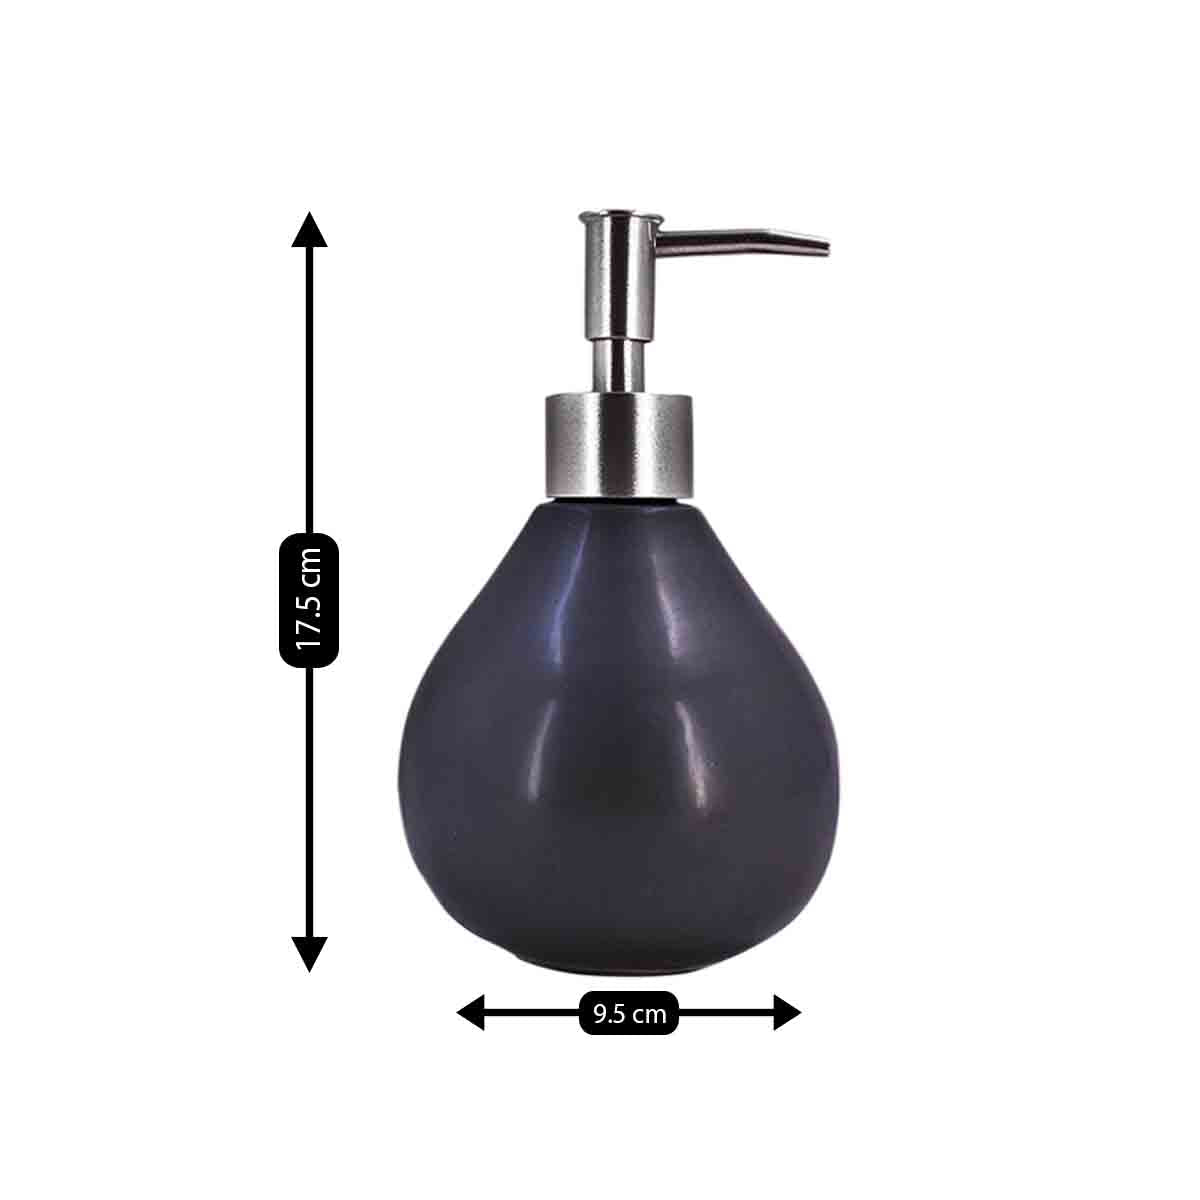 Ceramic Soap Dispenser Pump for Bathroom for Bath Gel, Lotion, Shampoo (8013)